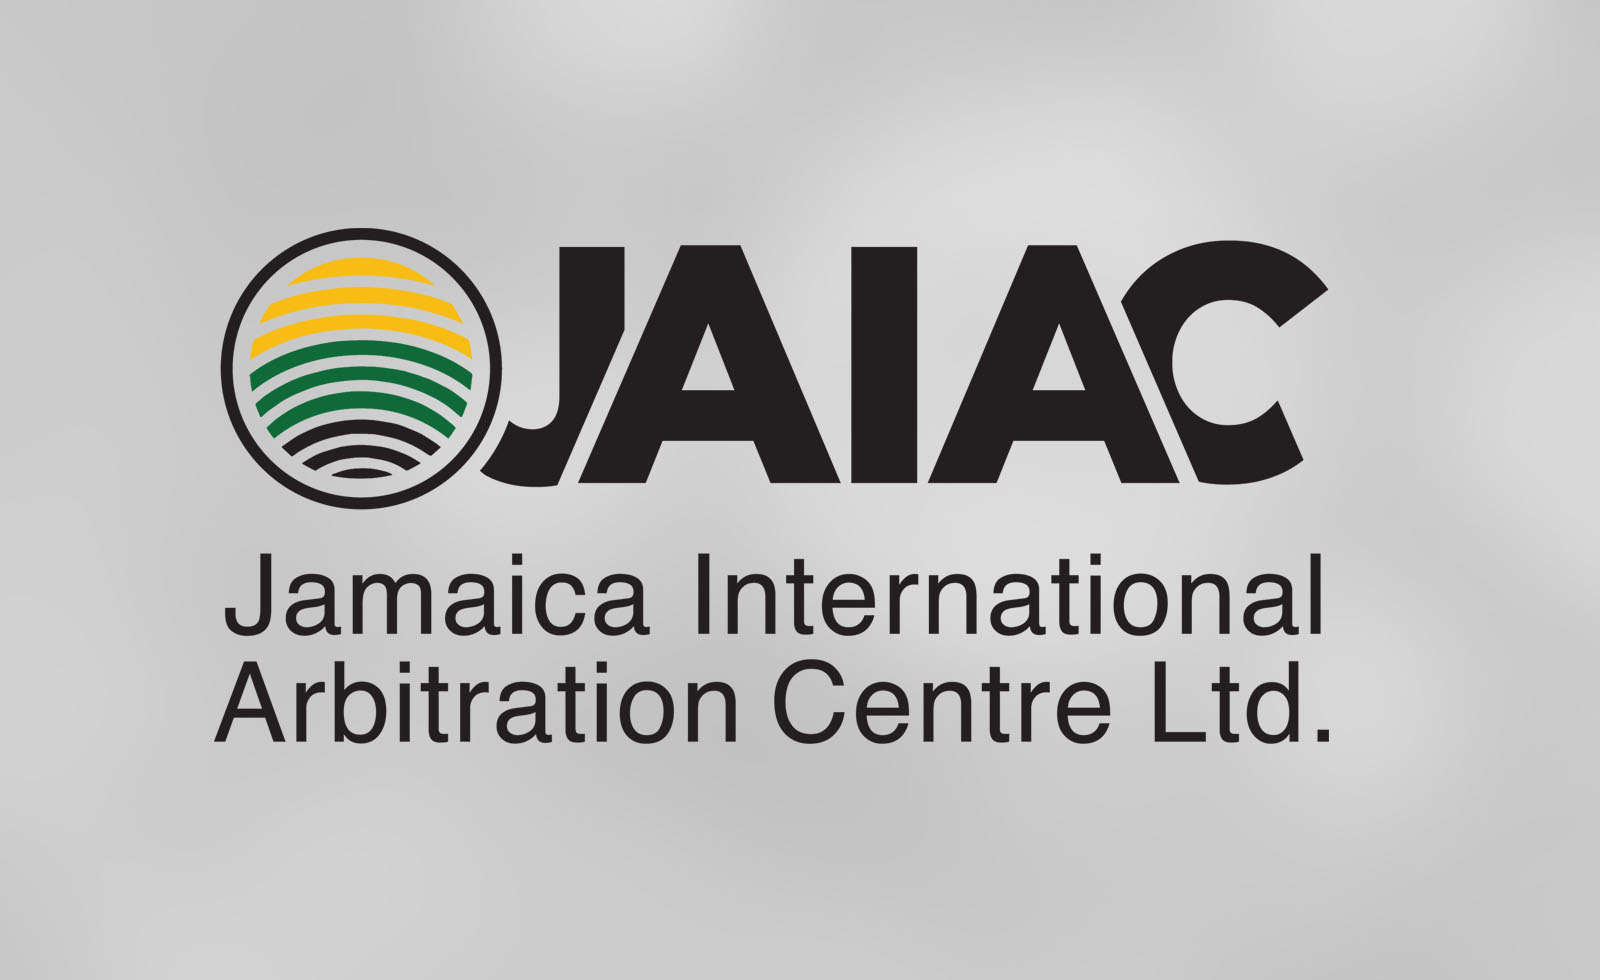 Jamaica International Arbitration Center Ltd